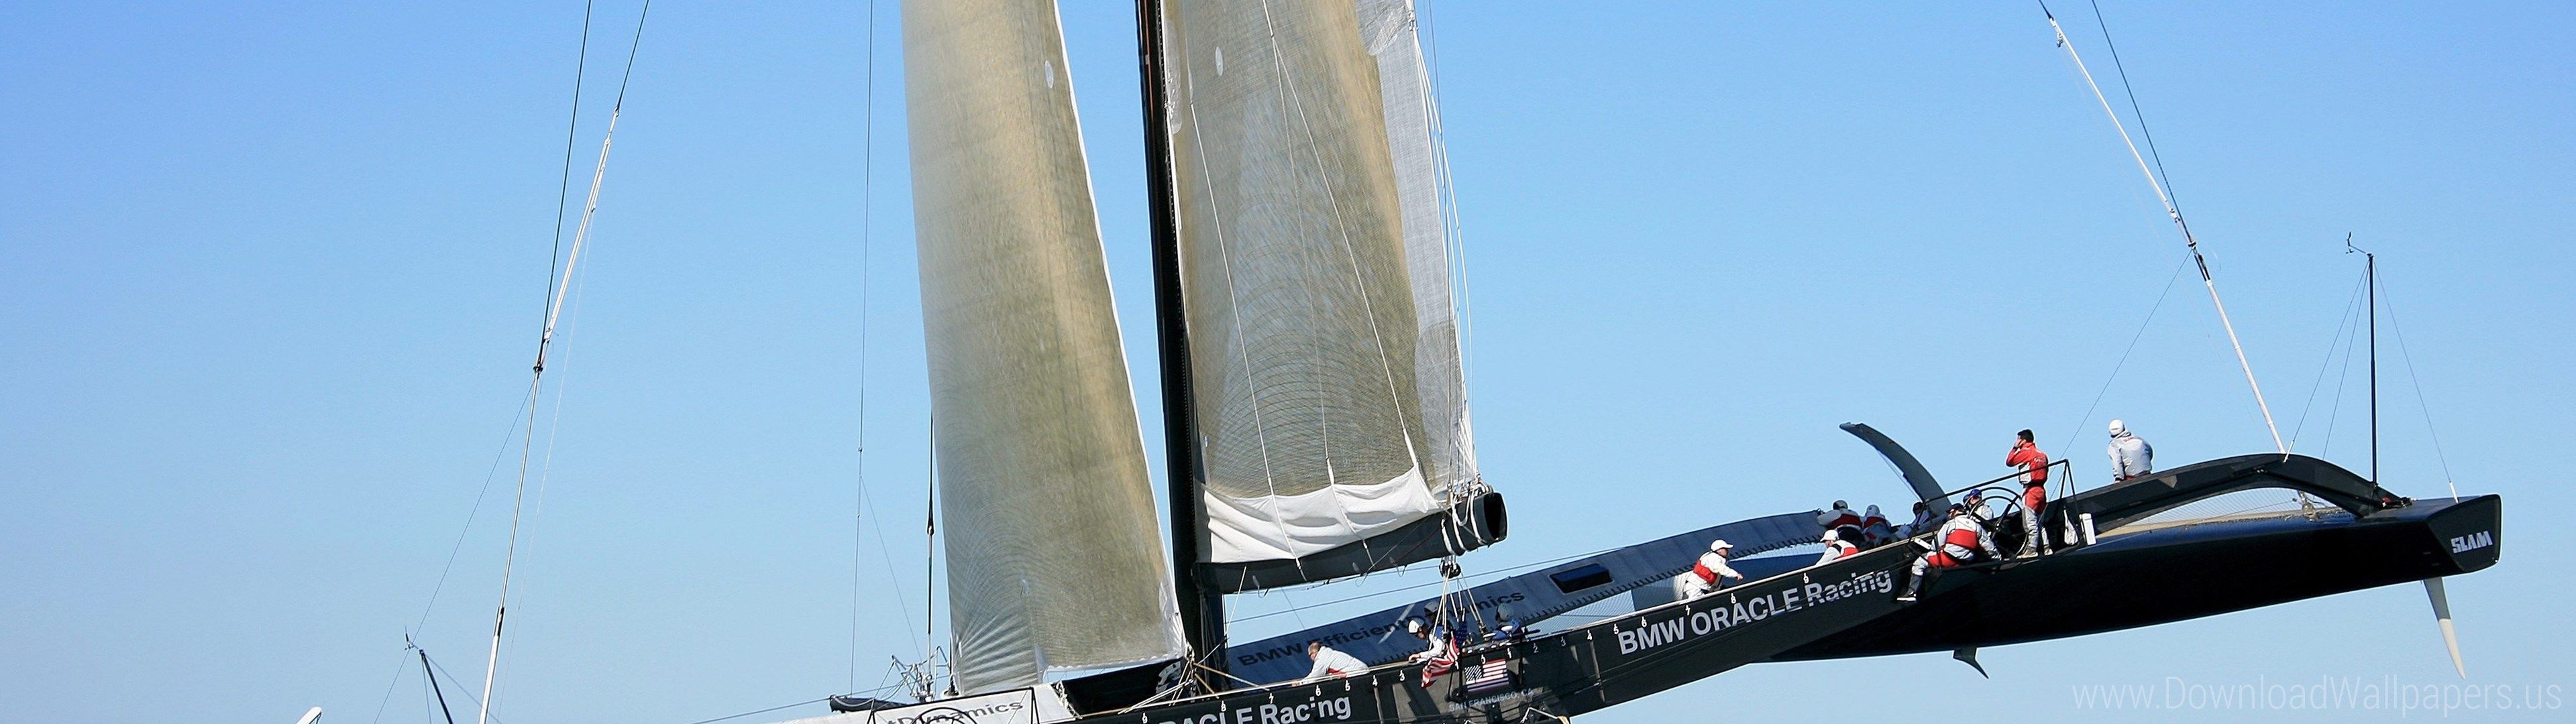 Sailing: Catamaran, The sport of traveling across the water in a boat, Windsports. 3840x1080 Dual Screen Wallpaper.